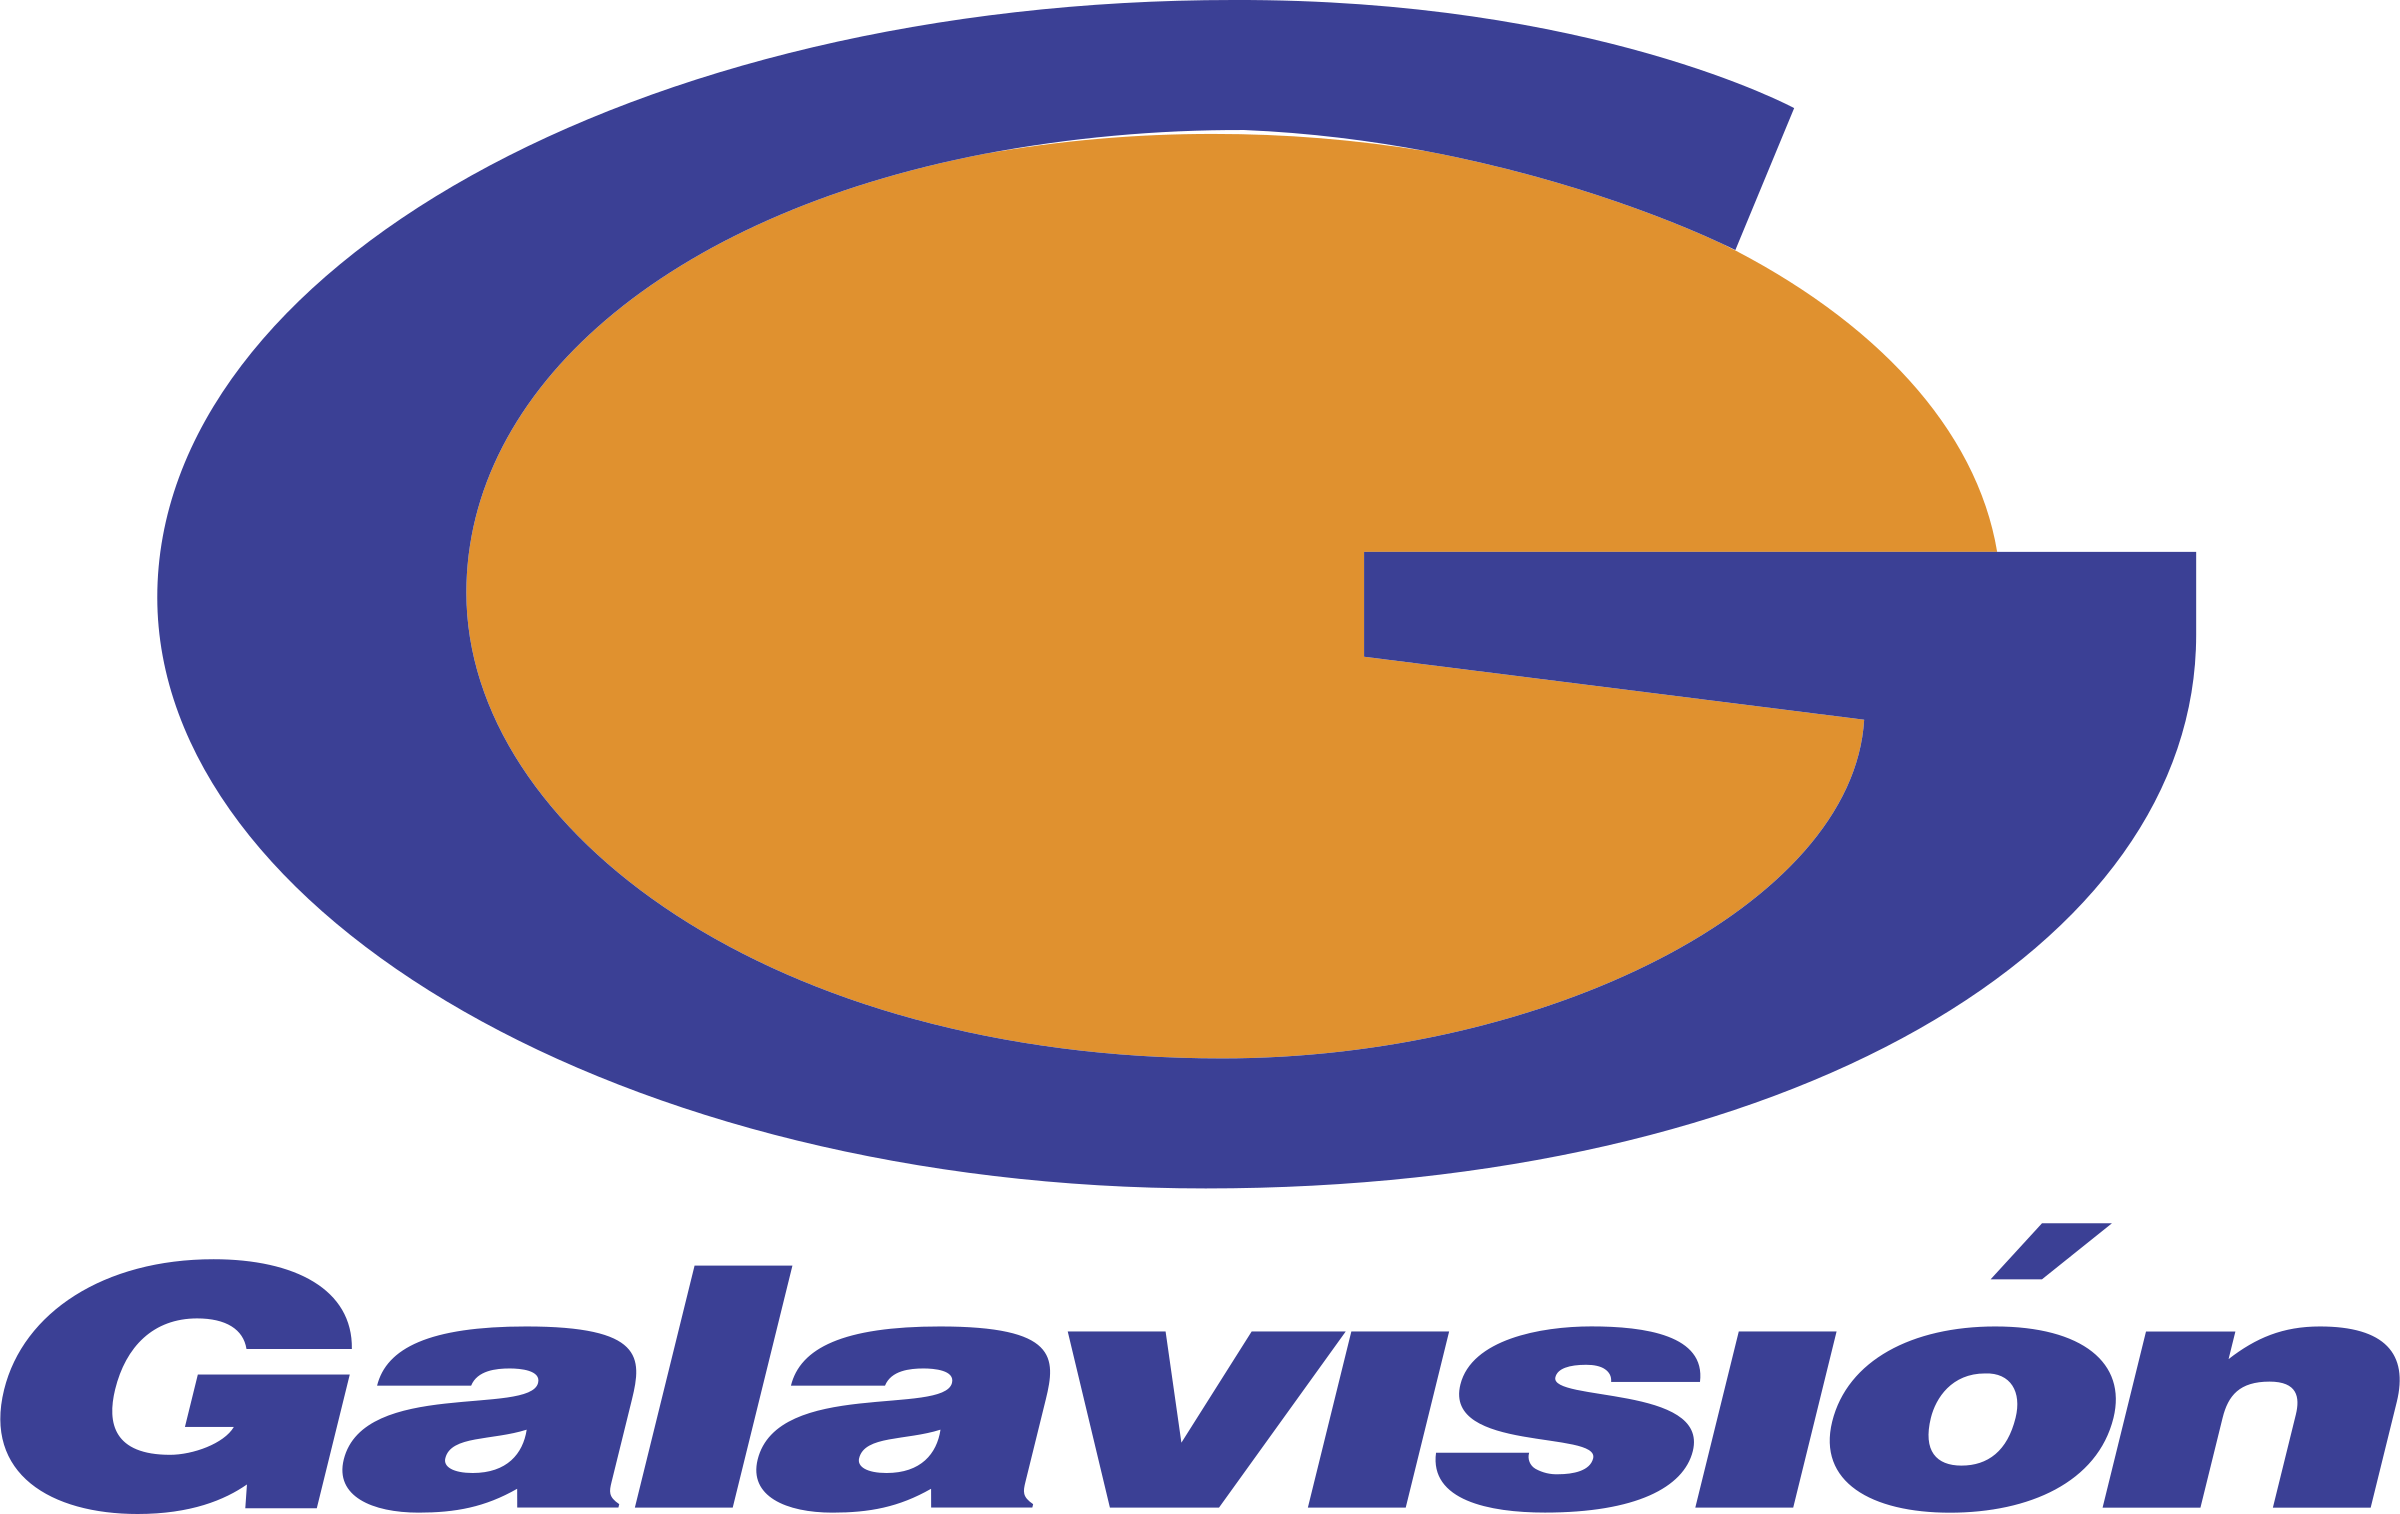 Galavision Logo - Galavision Logo PNG Transparent & SVG Vector - Freebie Supply